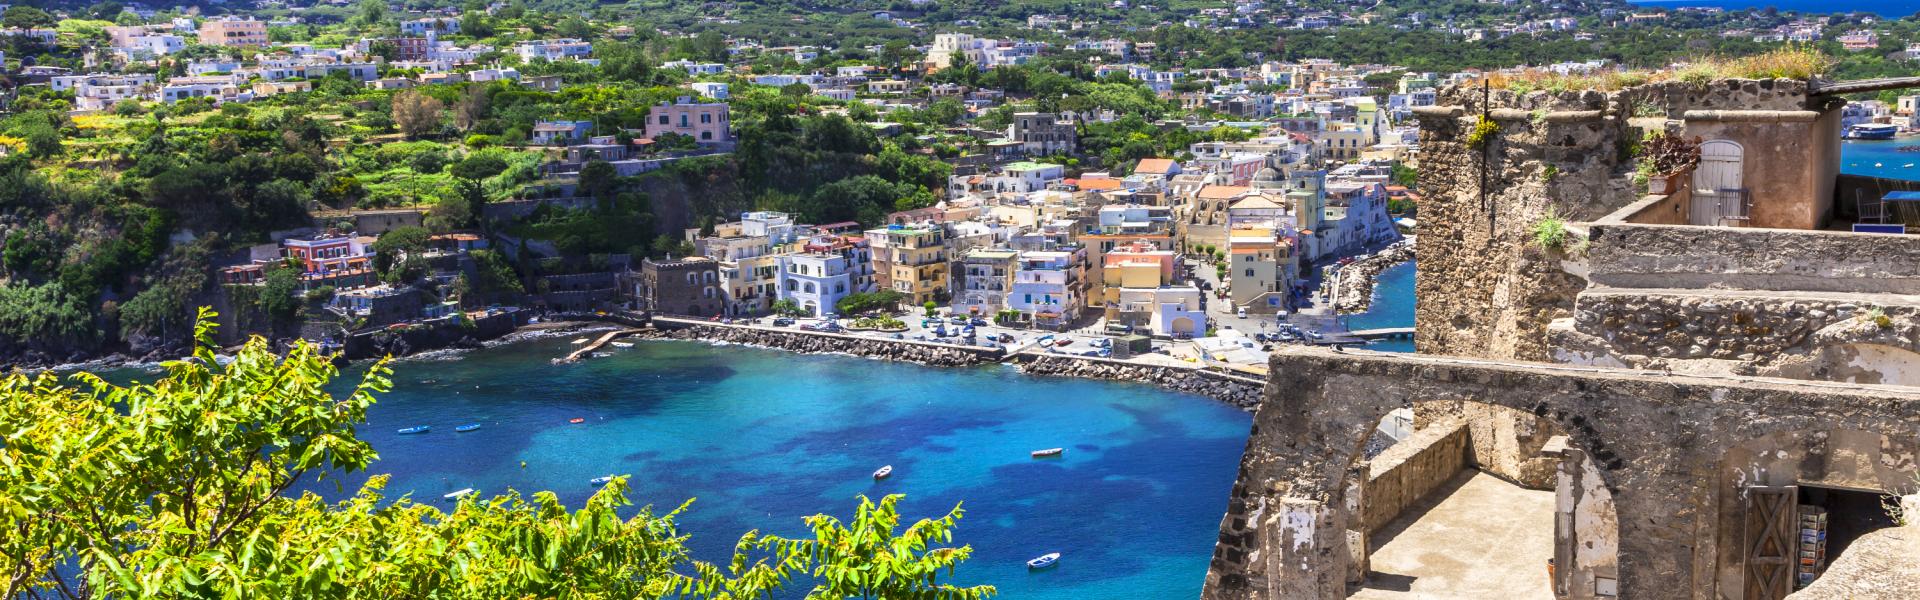 Vacanze ad Ischia - Dolci profumi mediterranei - Casamundo